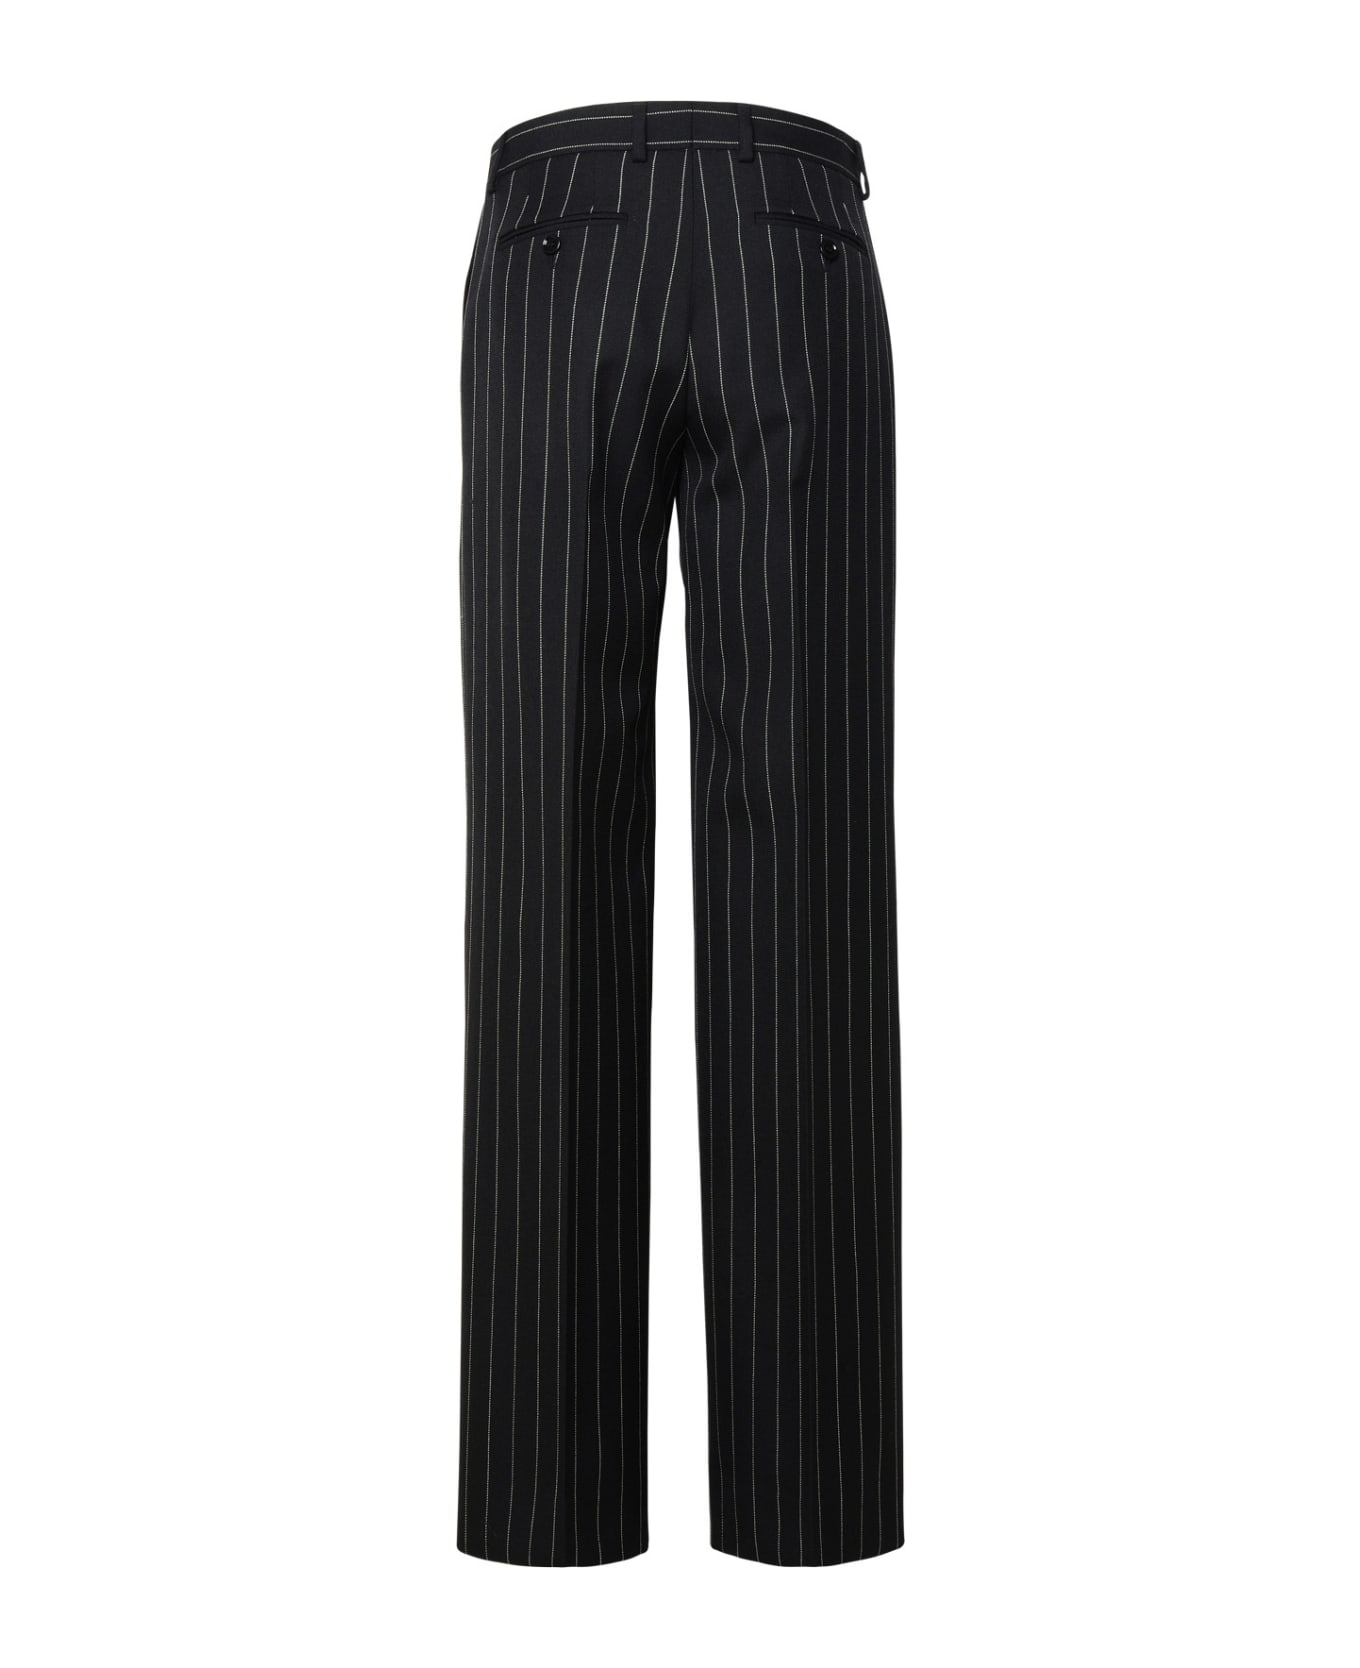 Dolce & Gabbana Black Virgin Wool Trousers - RIGATO (Black)